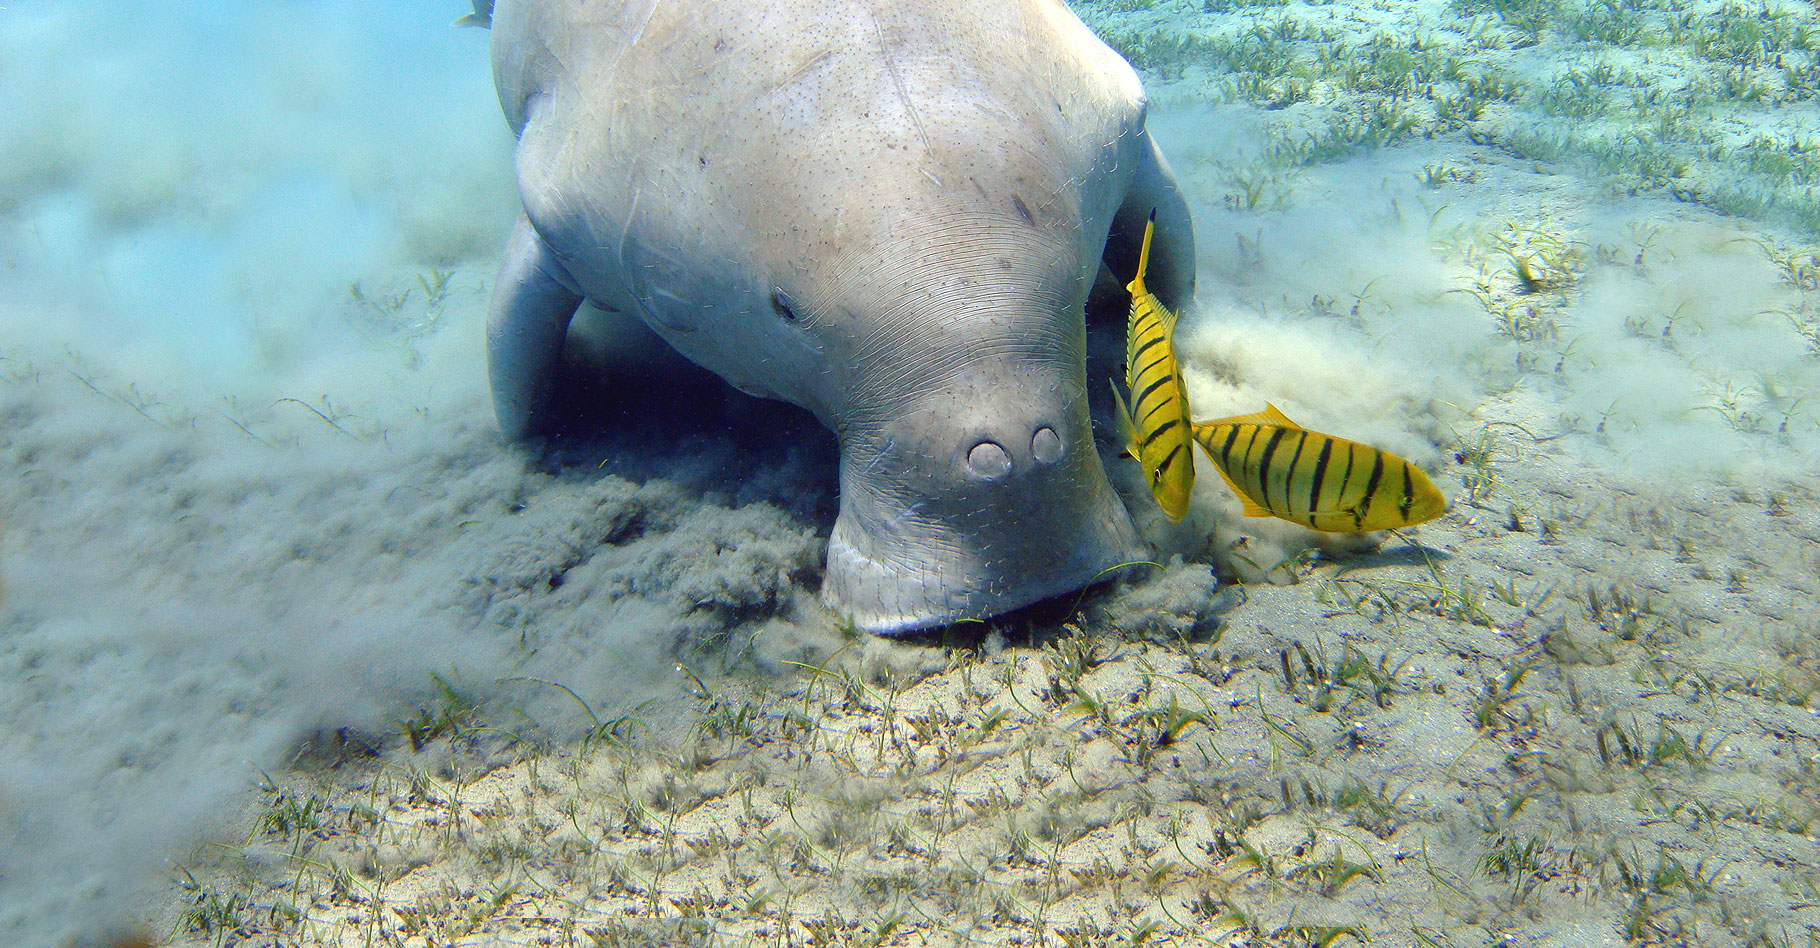 Un dugong à Marsa Alam (Égypte). © Julien Willen, Wikimedia commons, CC by-nc 2.0